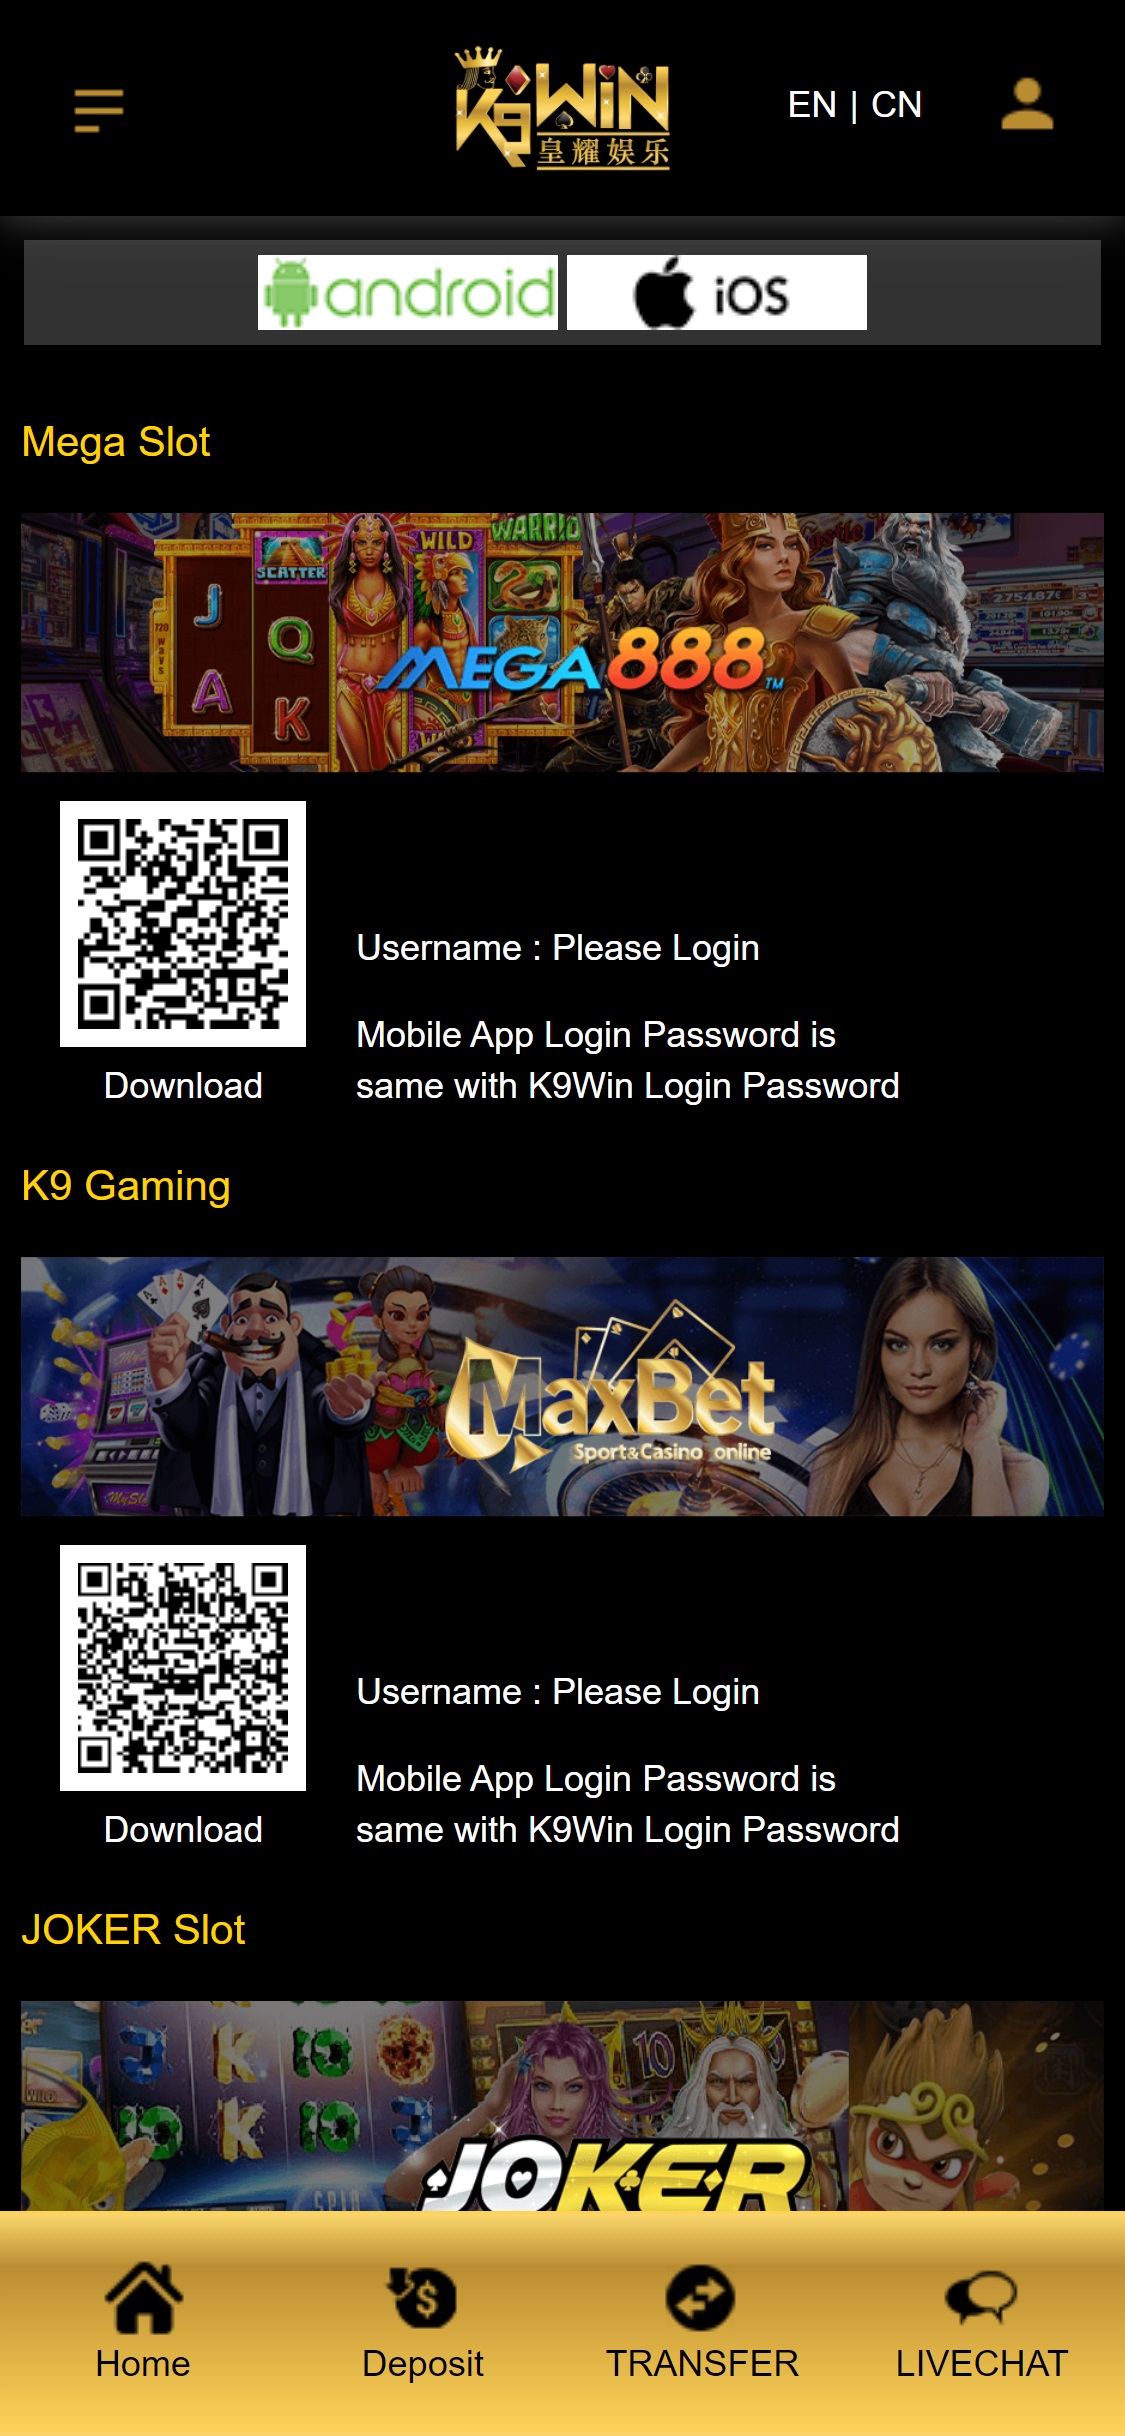 K9WIN Online Casino Mobile App Review